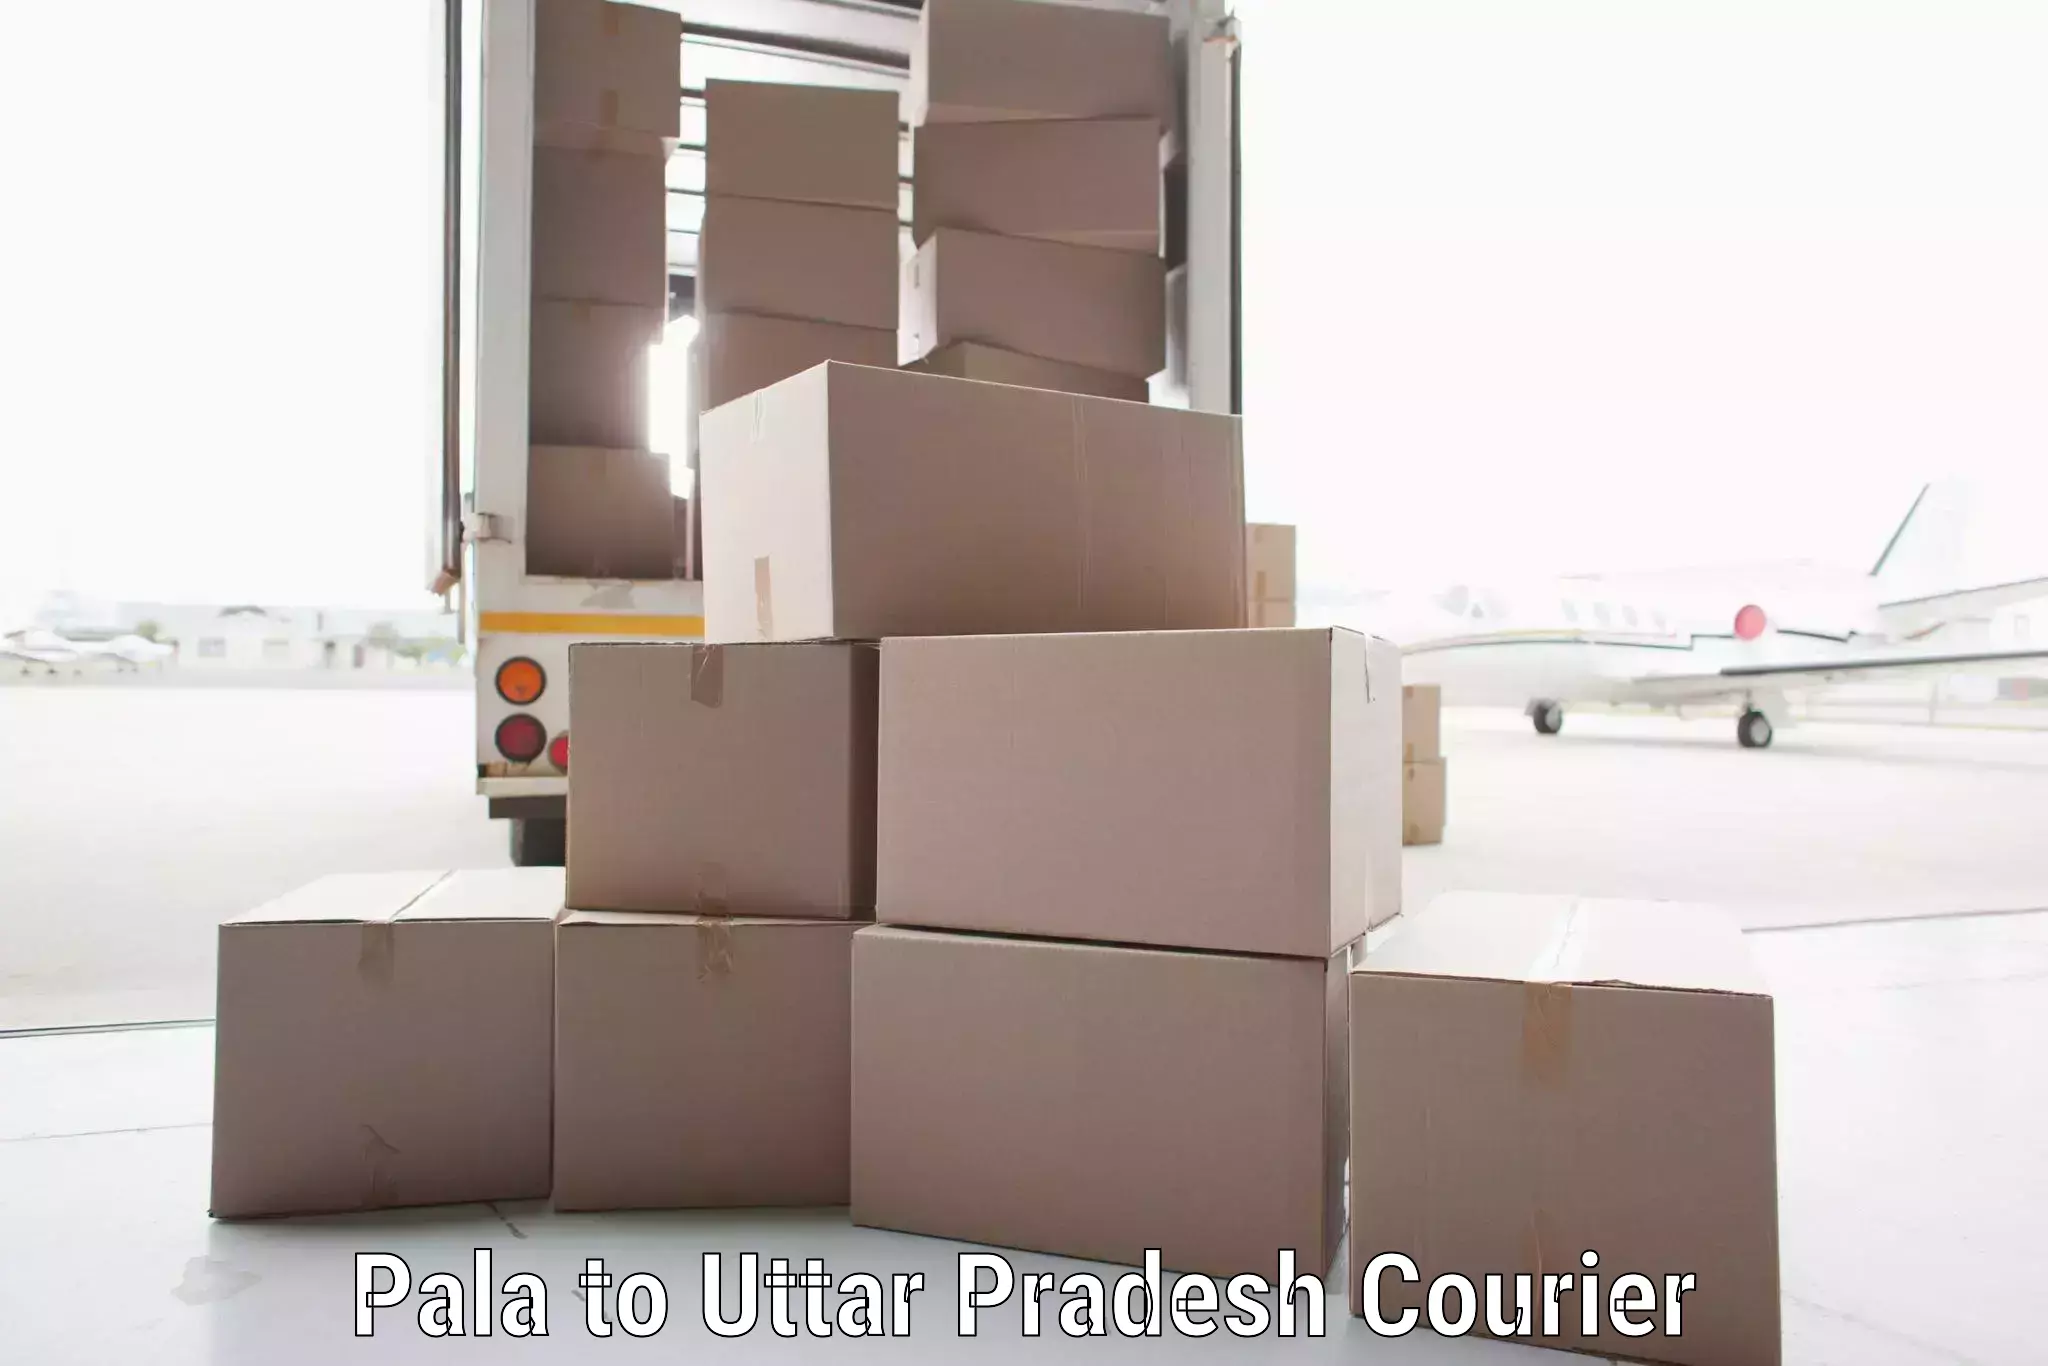 Multi-service courier options Pala to Pahasu